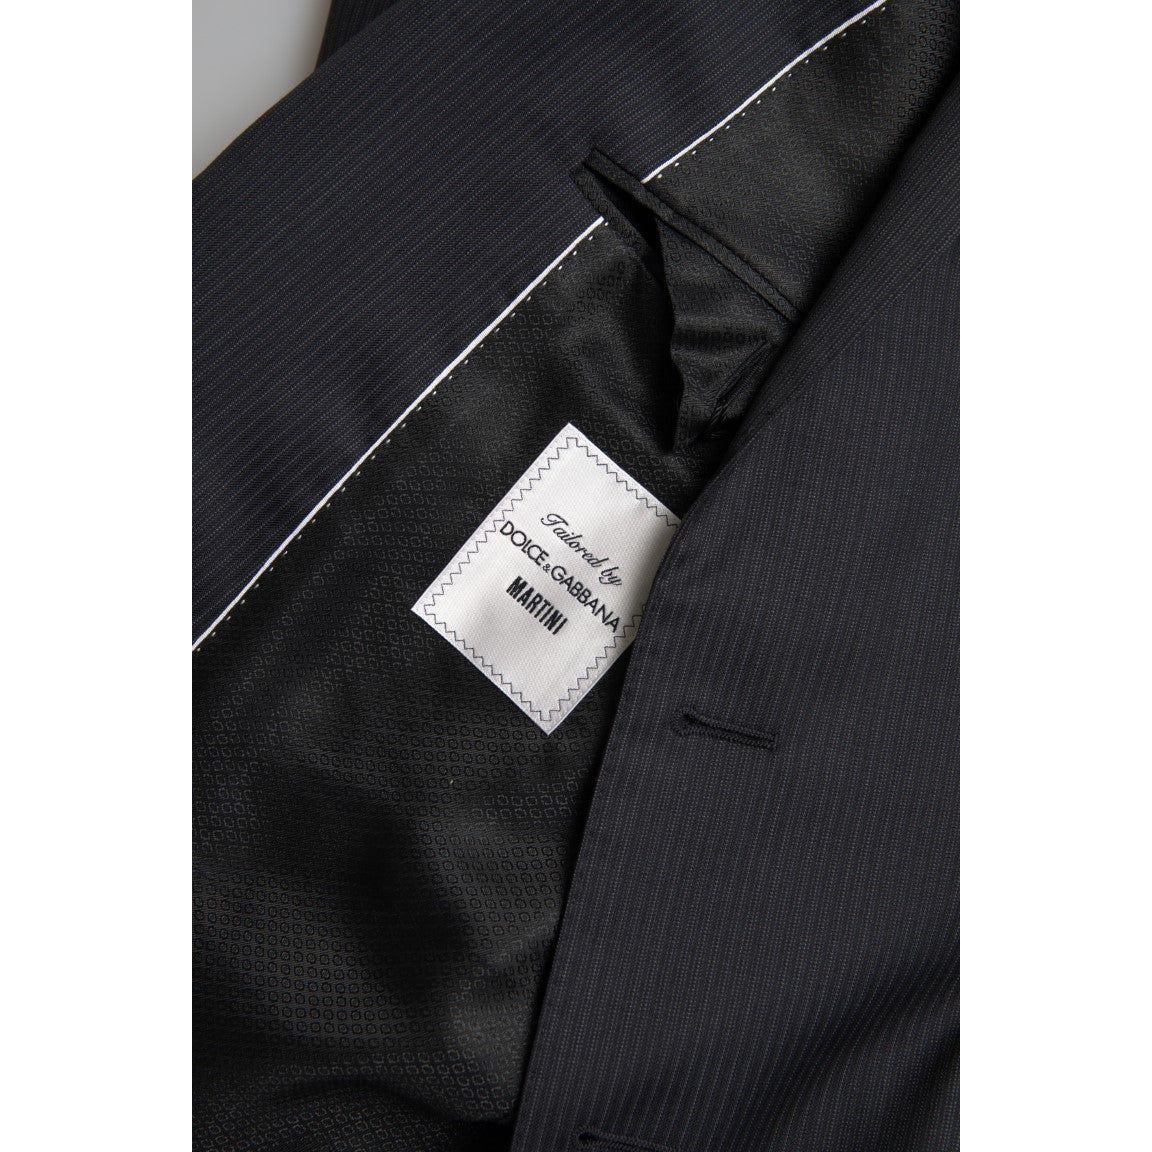 Dolce & Gabbana Elegant Black Two-Piece Slim Fit Suit black-2-piece-single-breasted-martini-suit-3